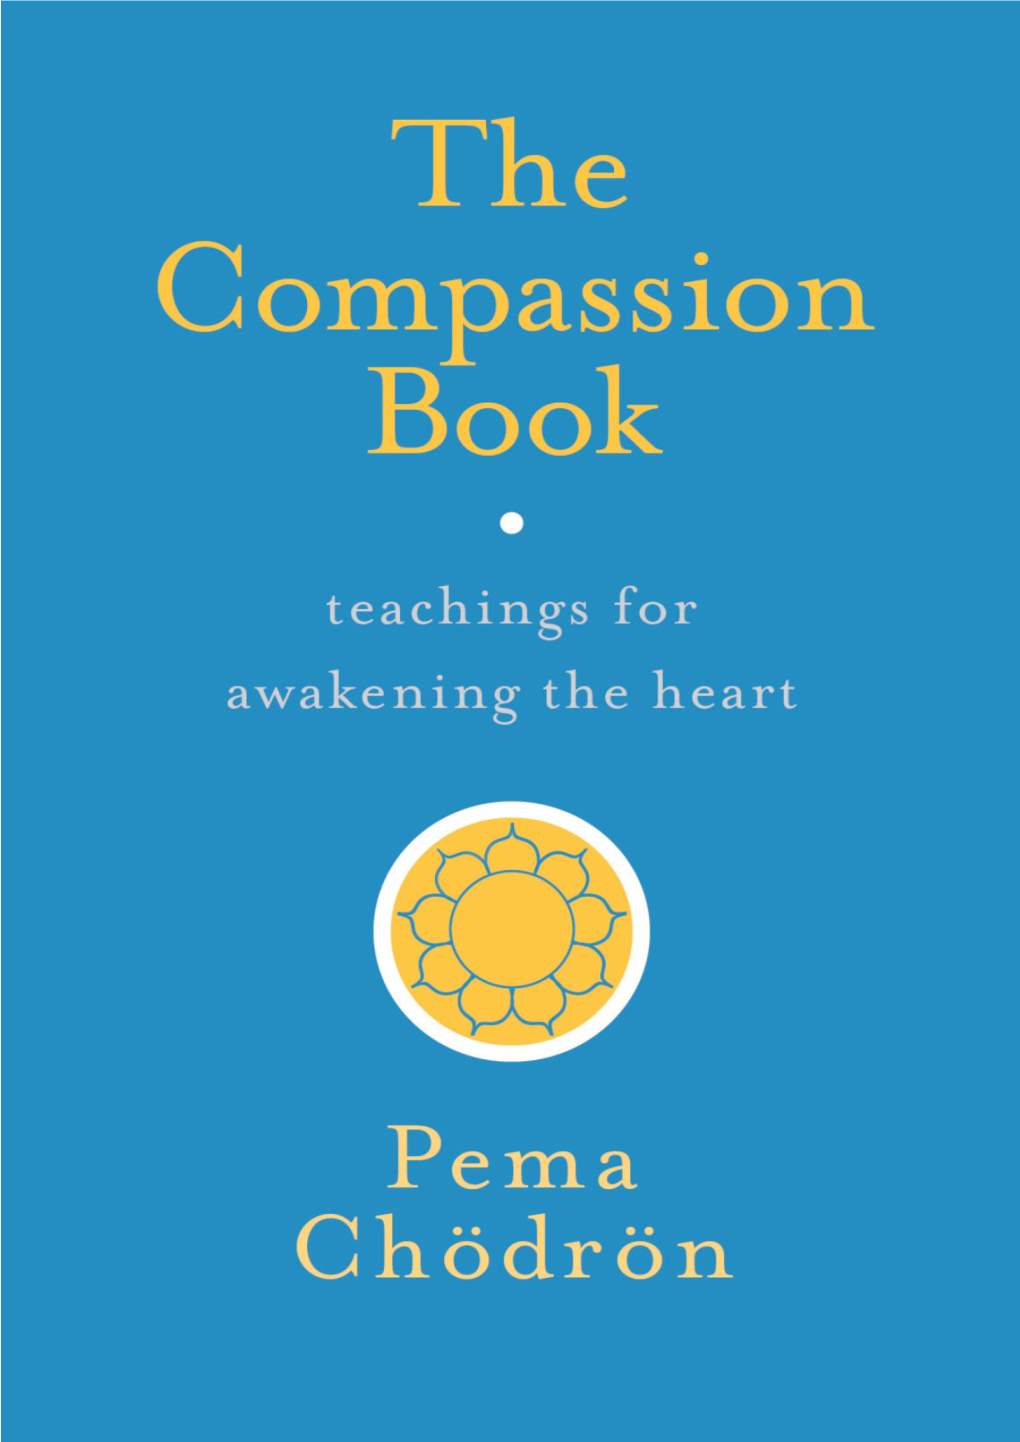 The Compassion Book: Teachings for Awakening the Heart / Pema Chödrön